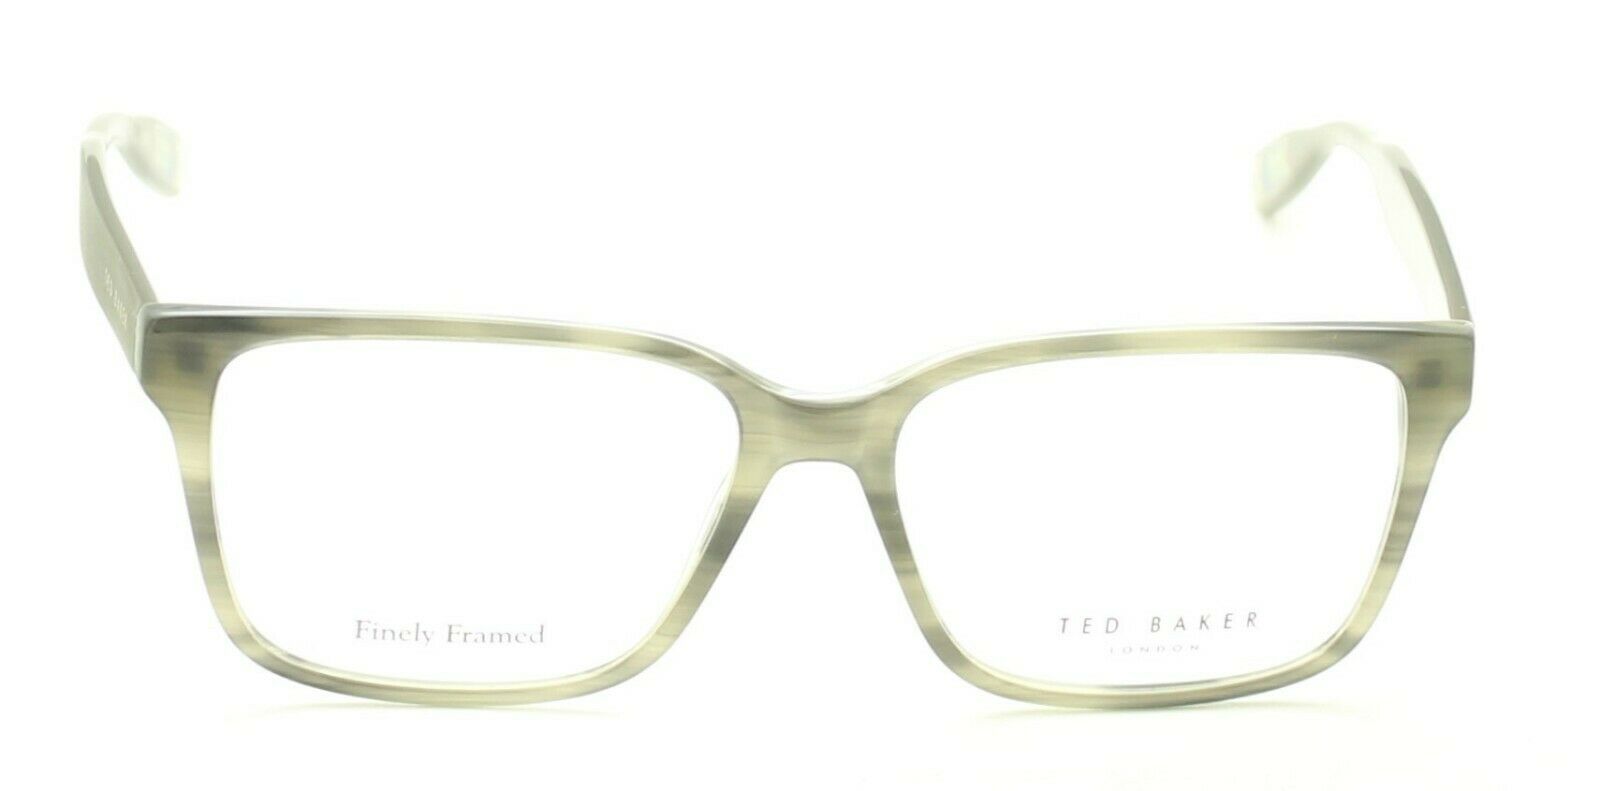 TED BAKER Noble 8198 953 55mm FRAMES Glasses Eyeglasses RX Optical Eyewear - New